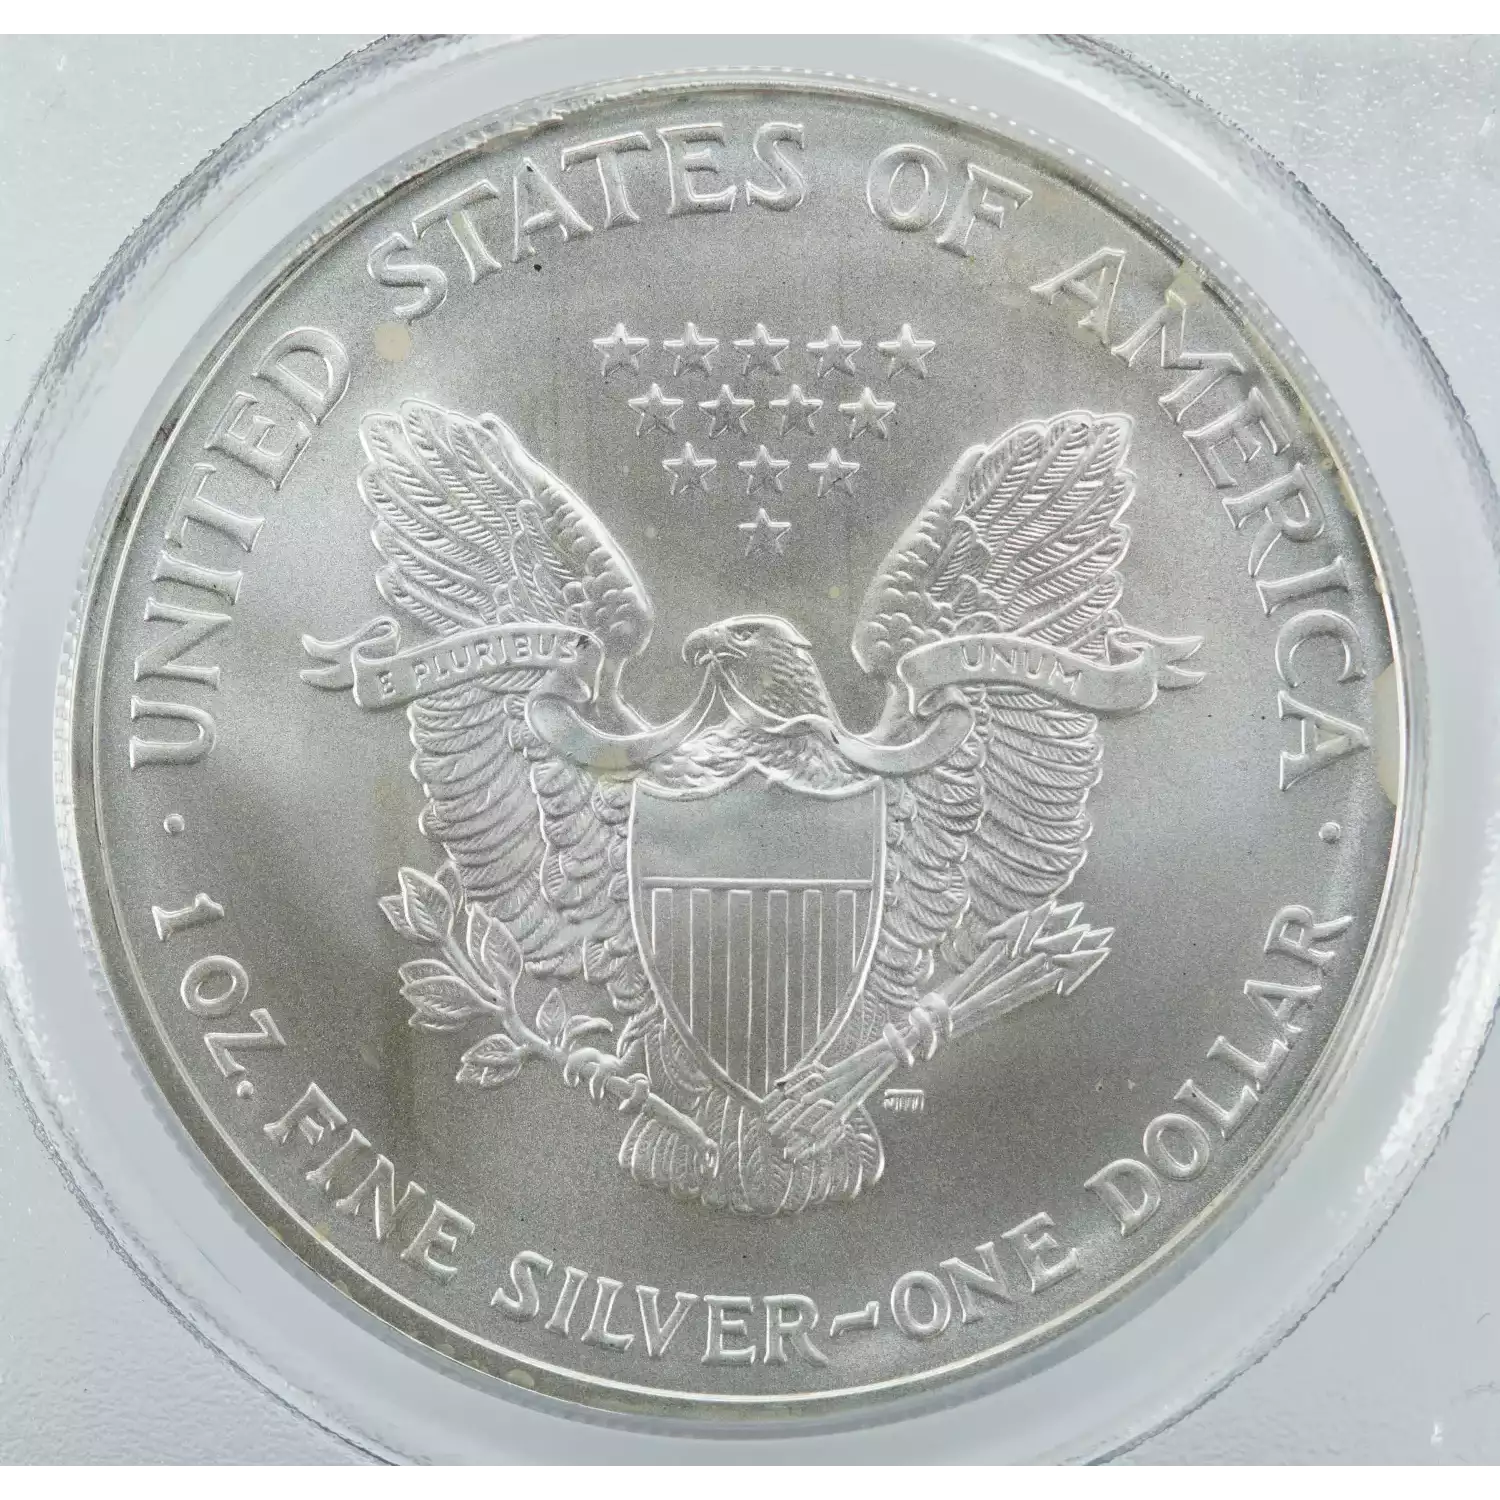 2005 $1 Silver Eagle First Strike